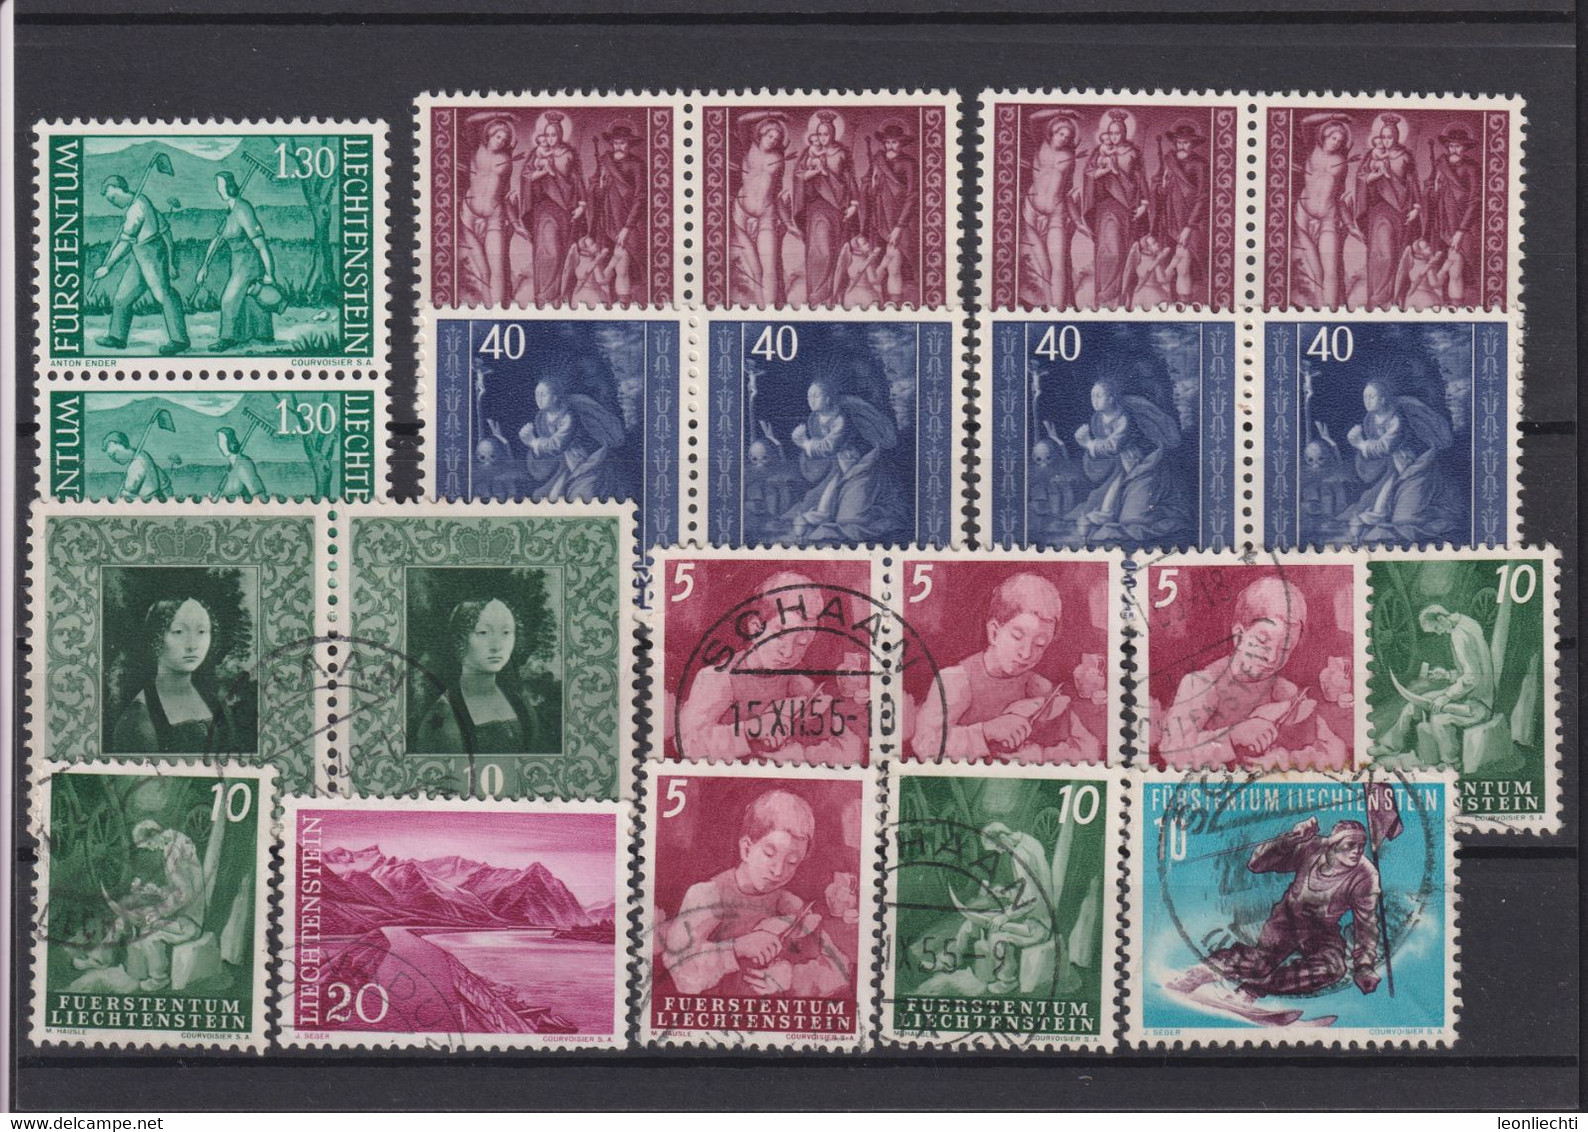 Liechtenstein Lot °  Briefmarken Gestempelt /  Stamps Stamped /  Timbres Oblitérés - Collections